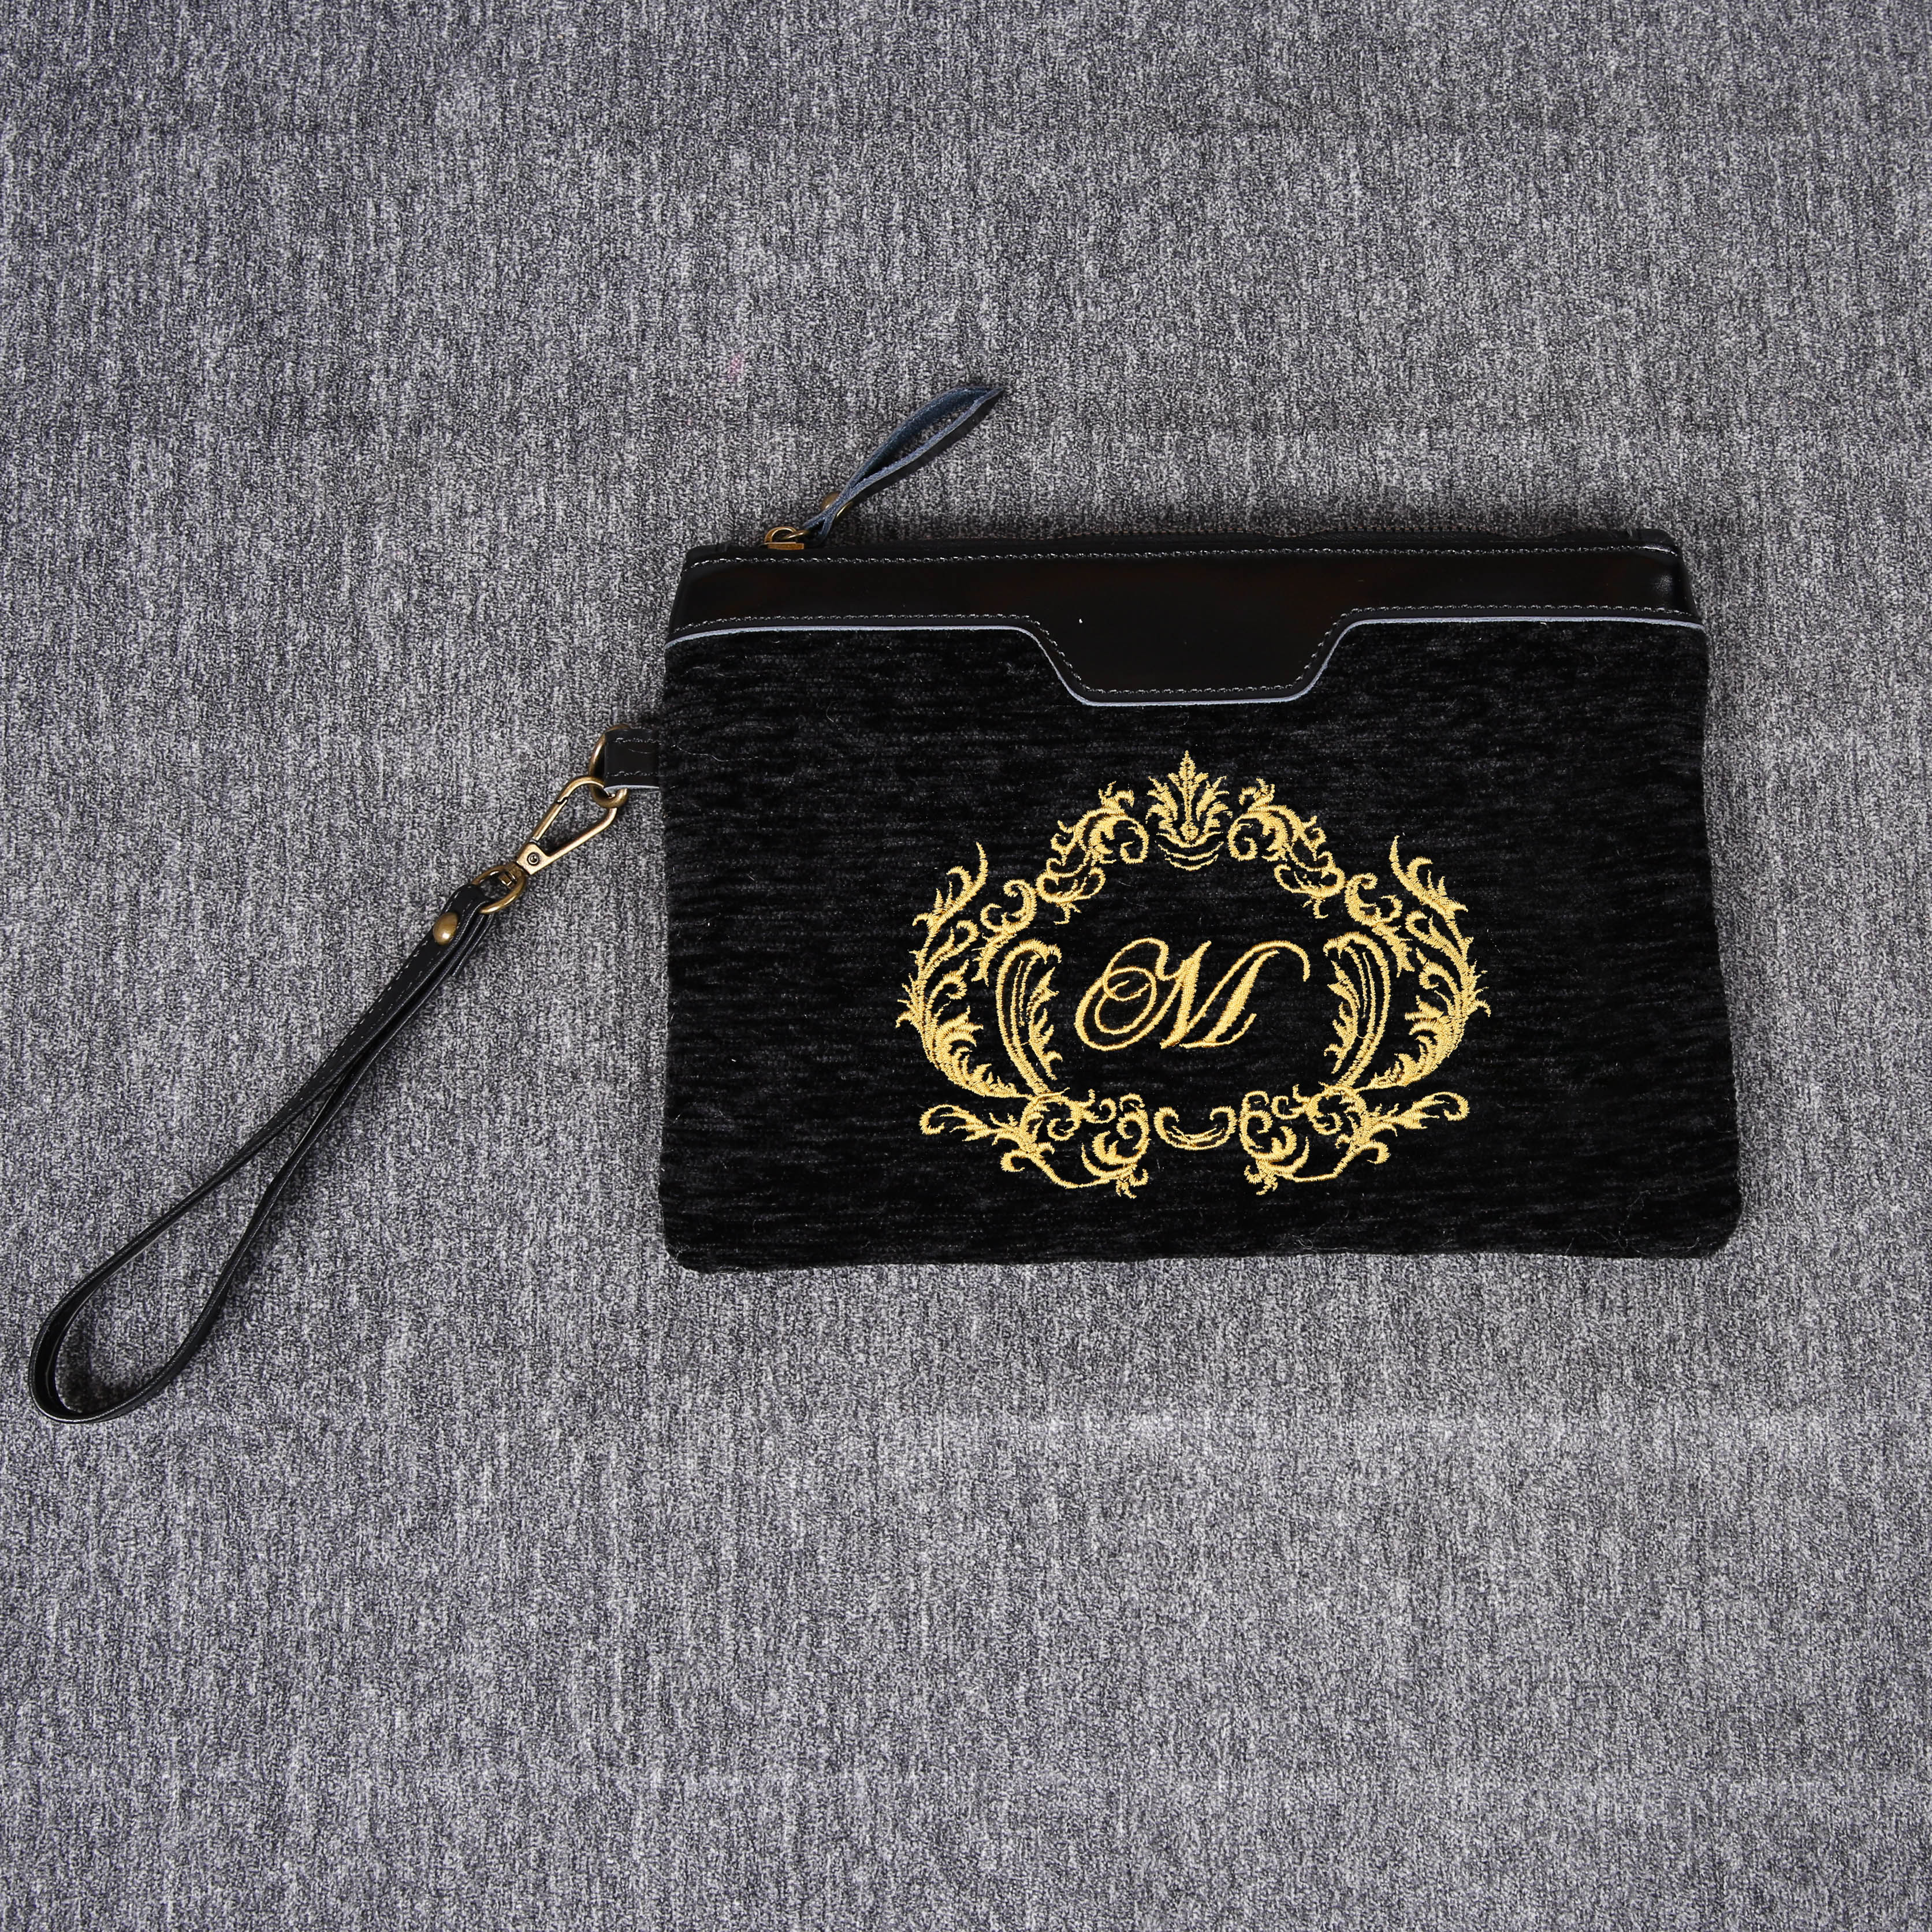 Luxury Monogrammed Black Clutch carpet bag MCW Handmade